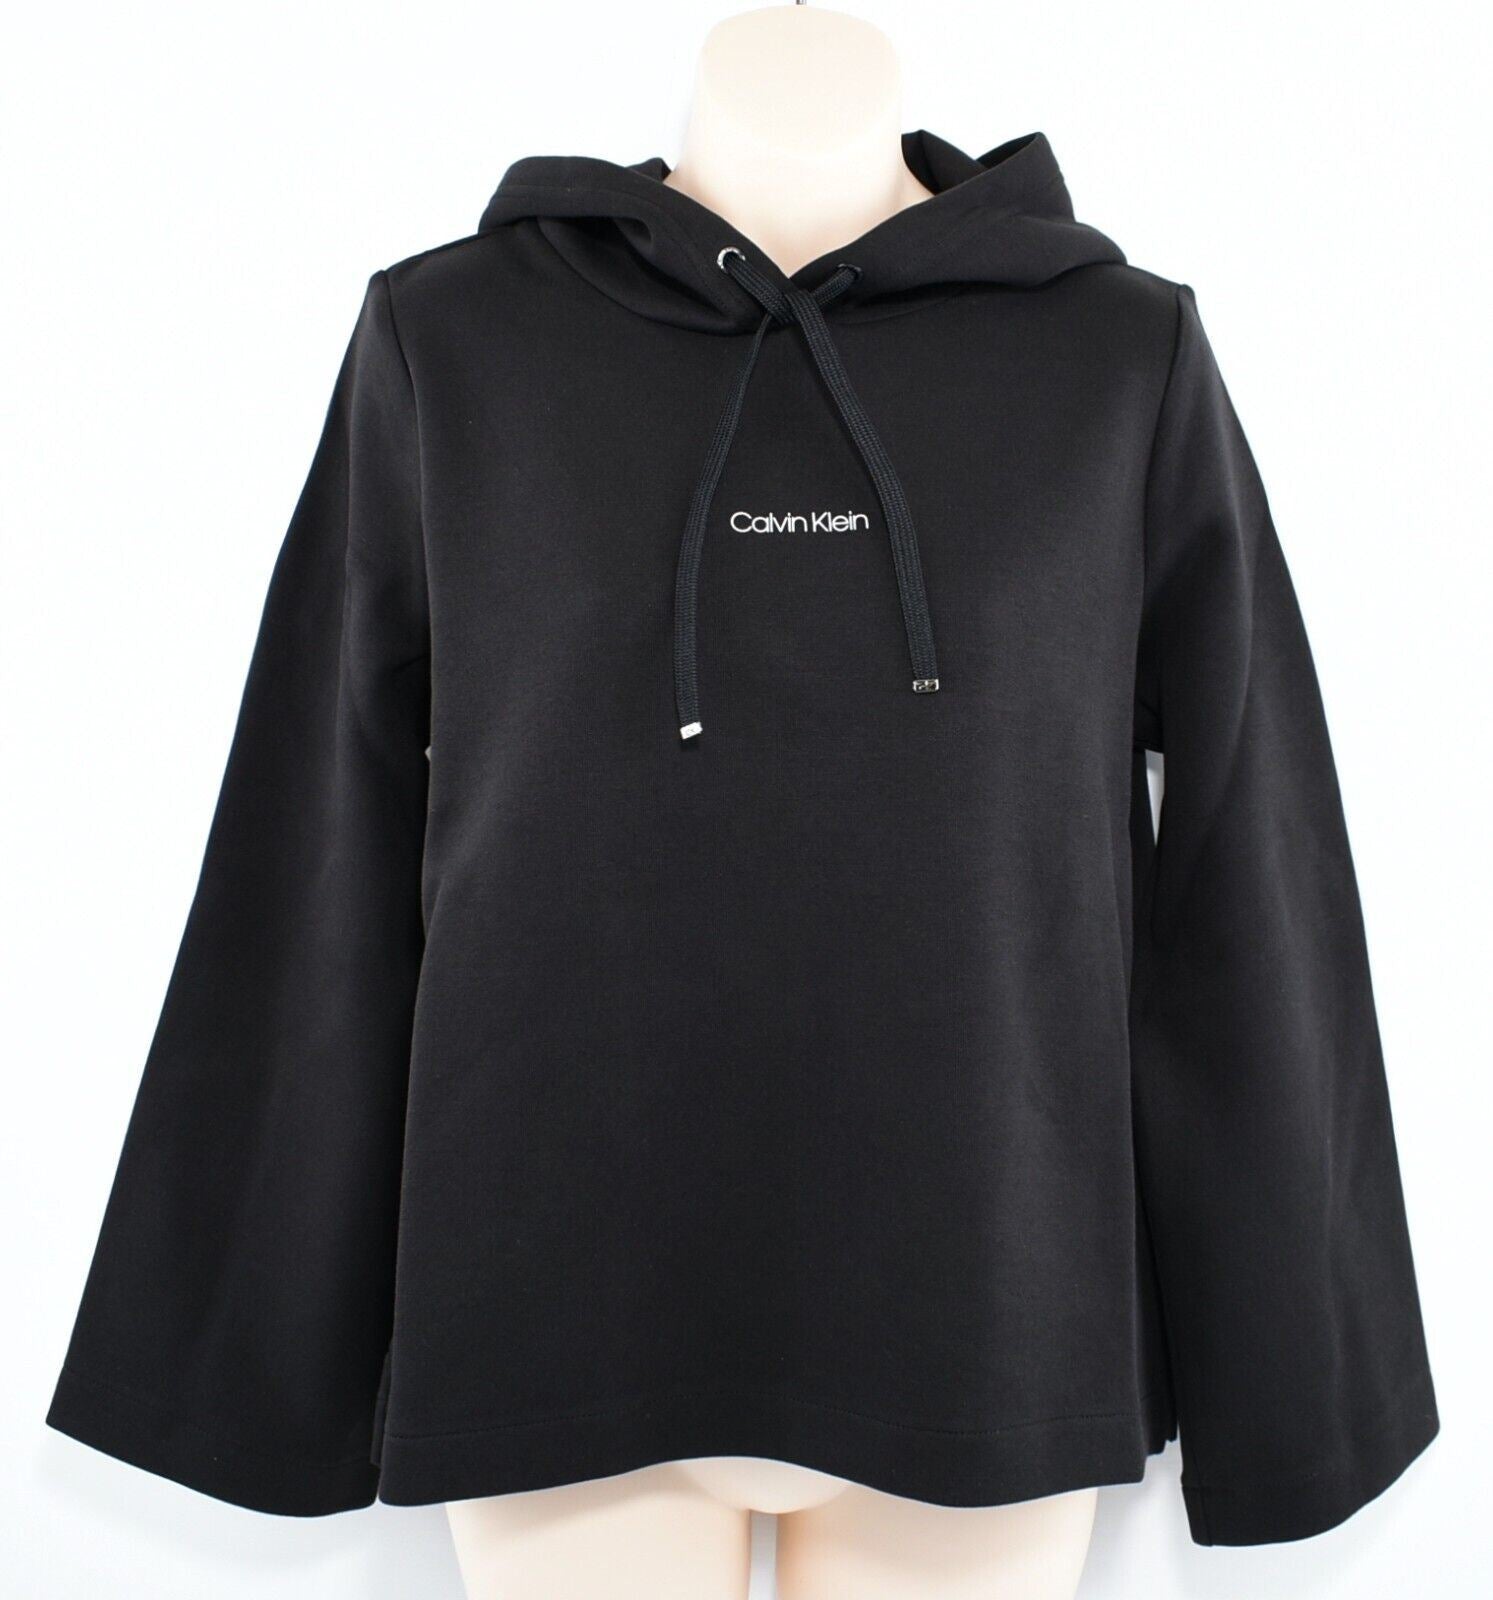 CALVIN KLEIN Women's Mini CK Cropped Hoodie Sweatshirt, Black, size S (UK 10)